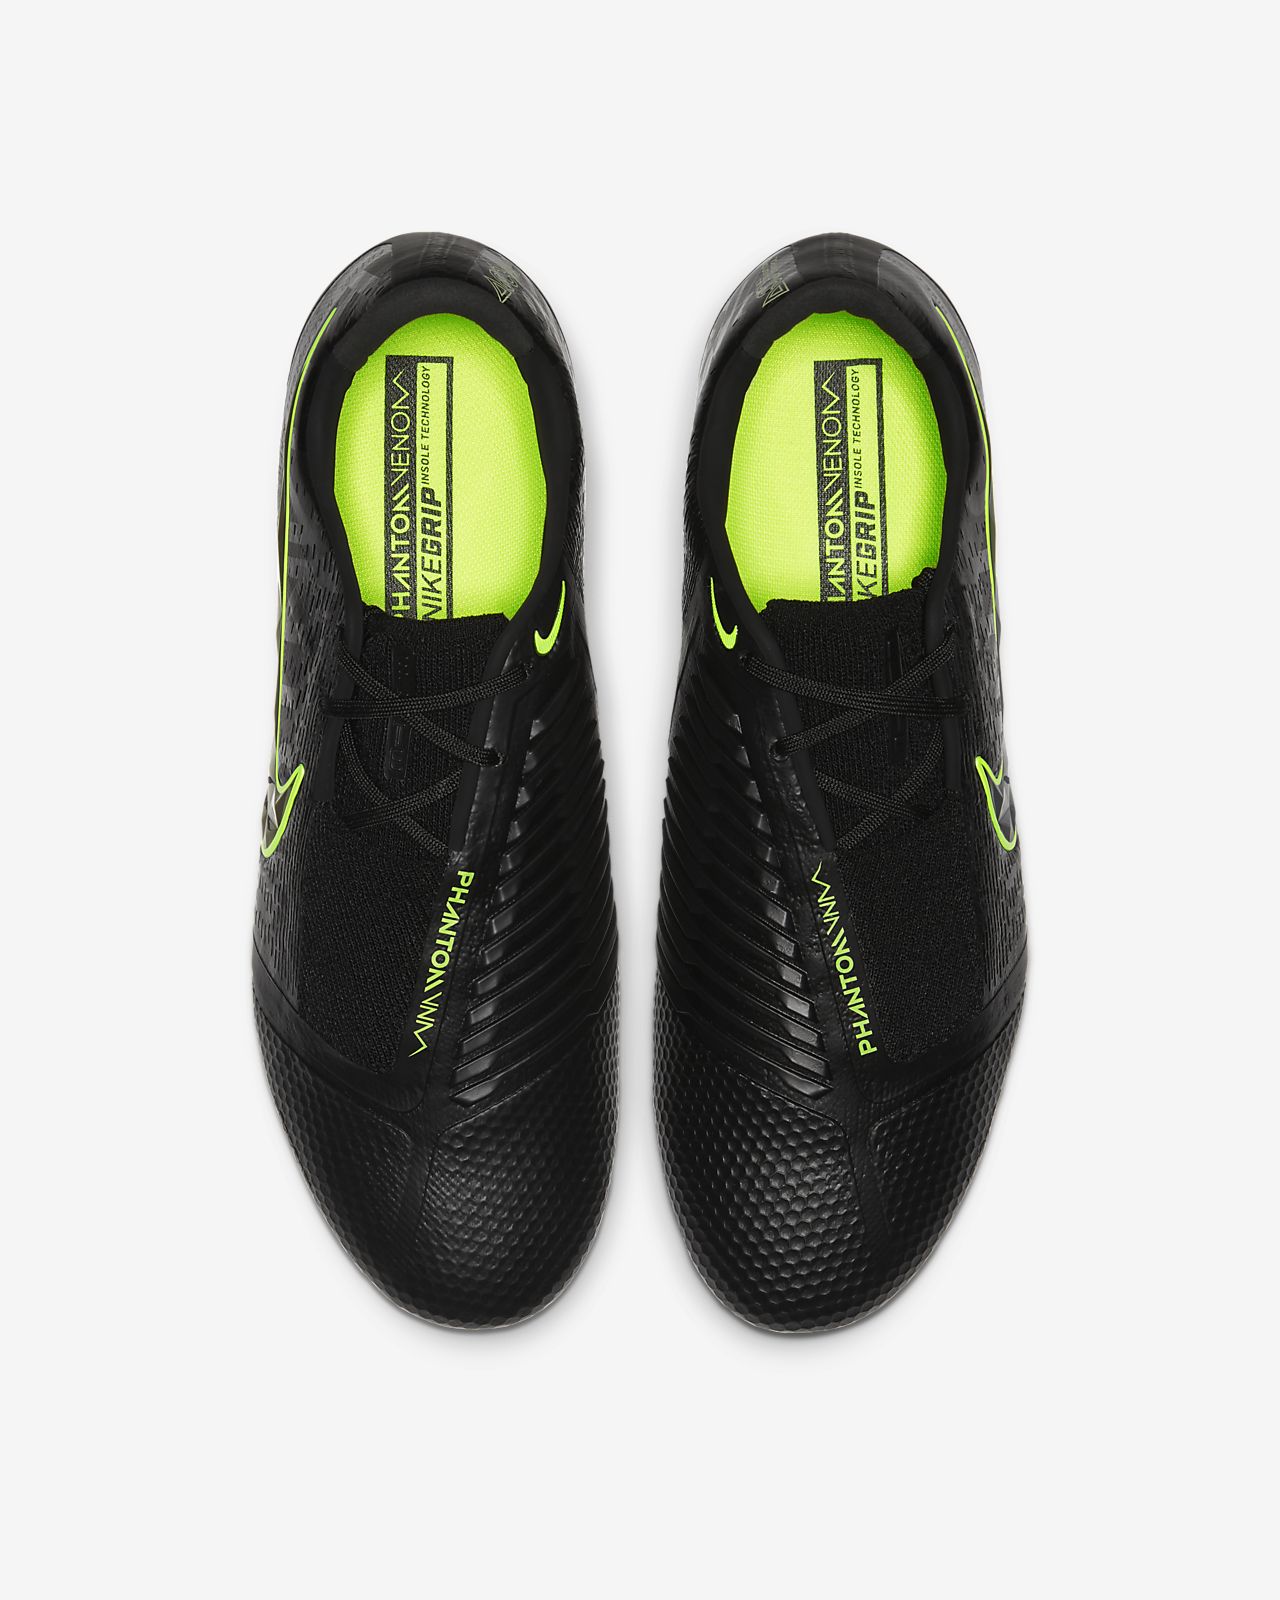 Nike Phantom Venom Academy FG Football Boots 拢 56.00